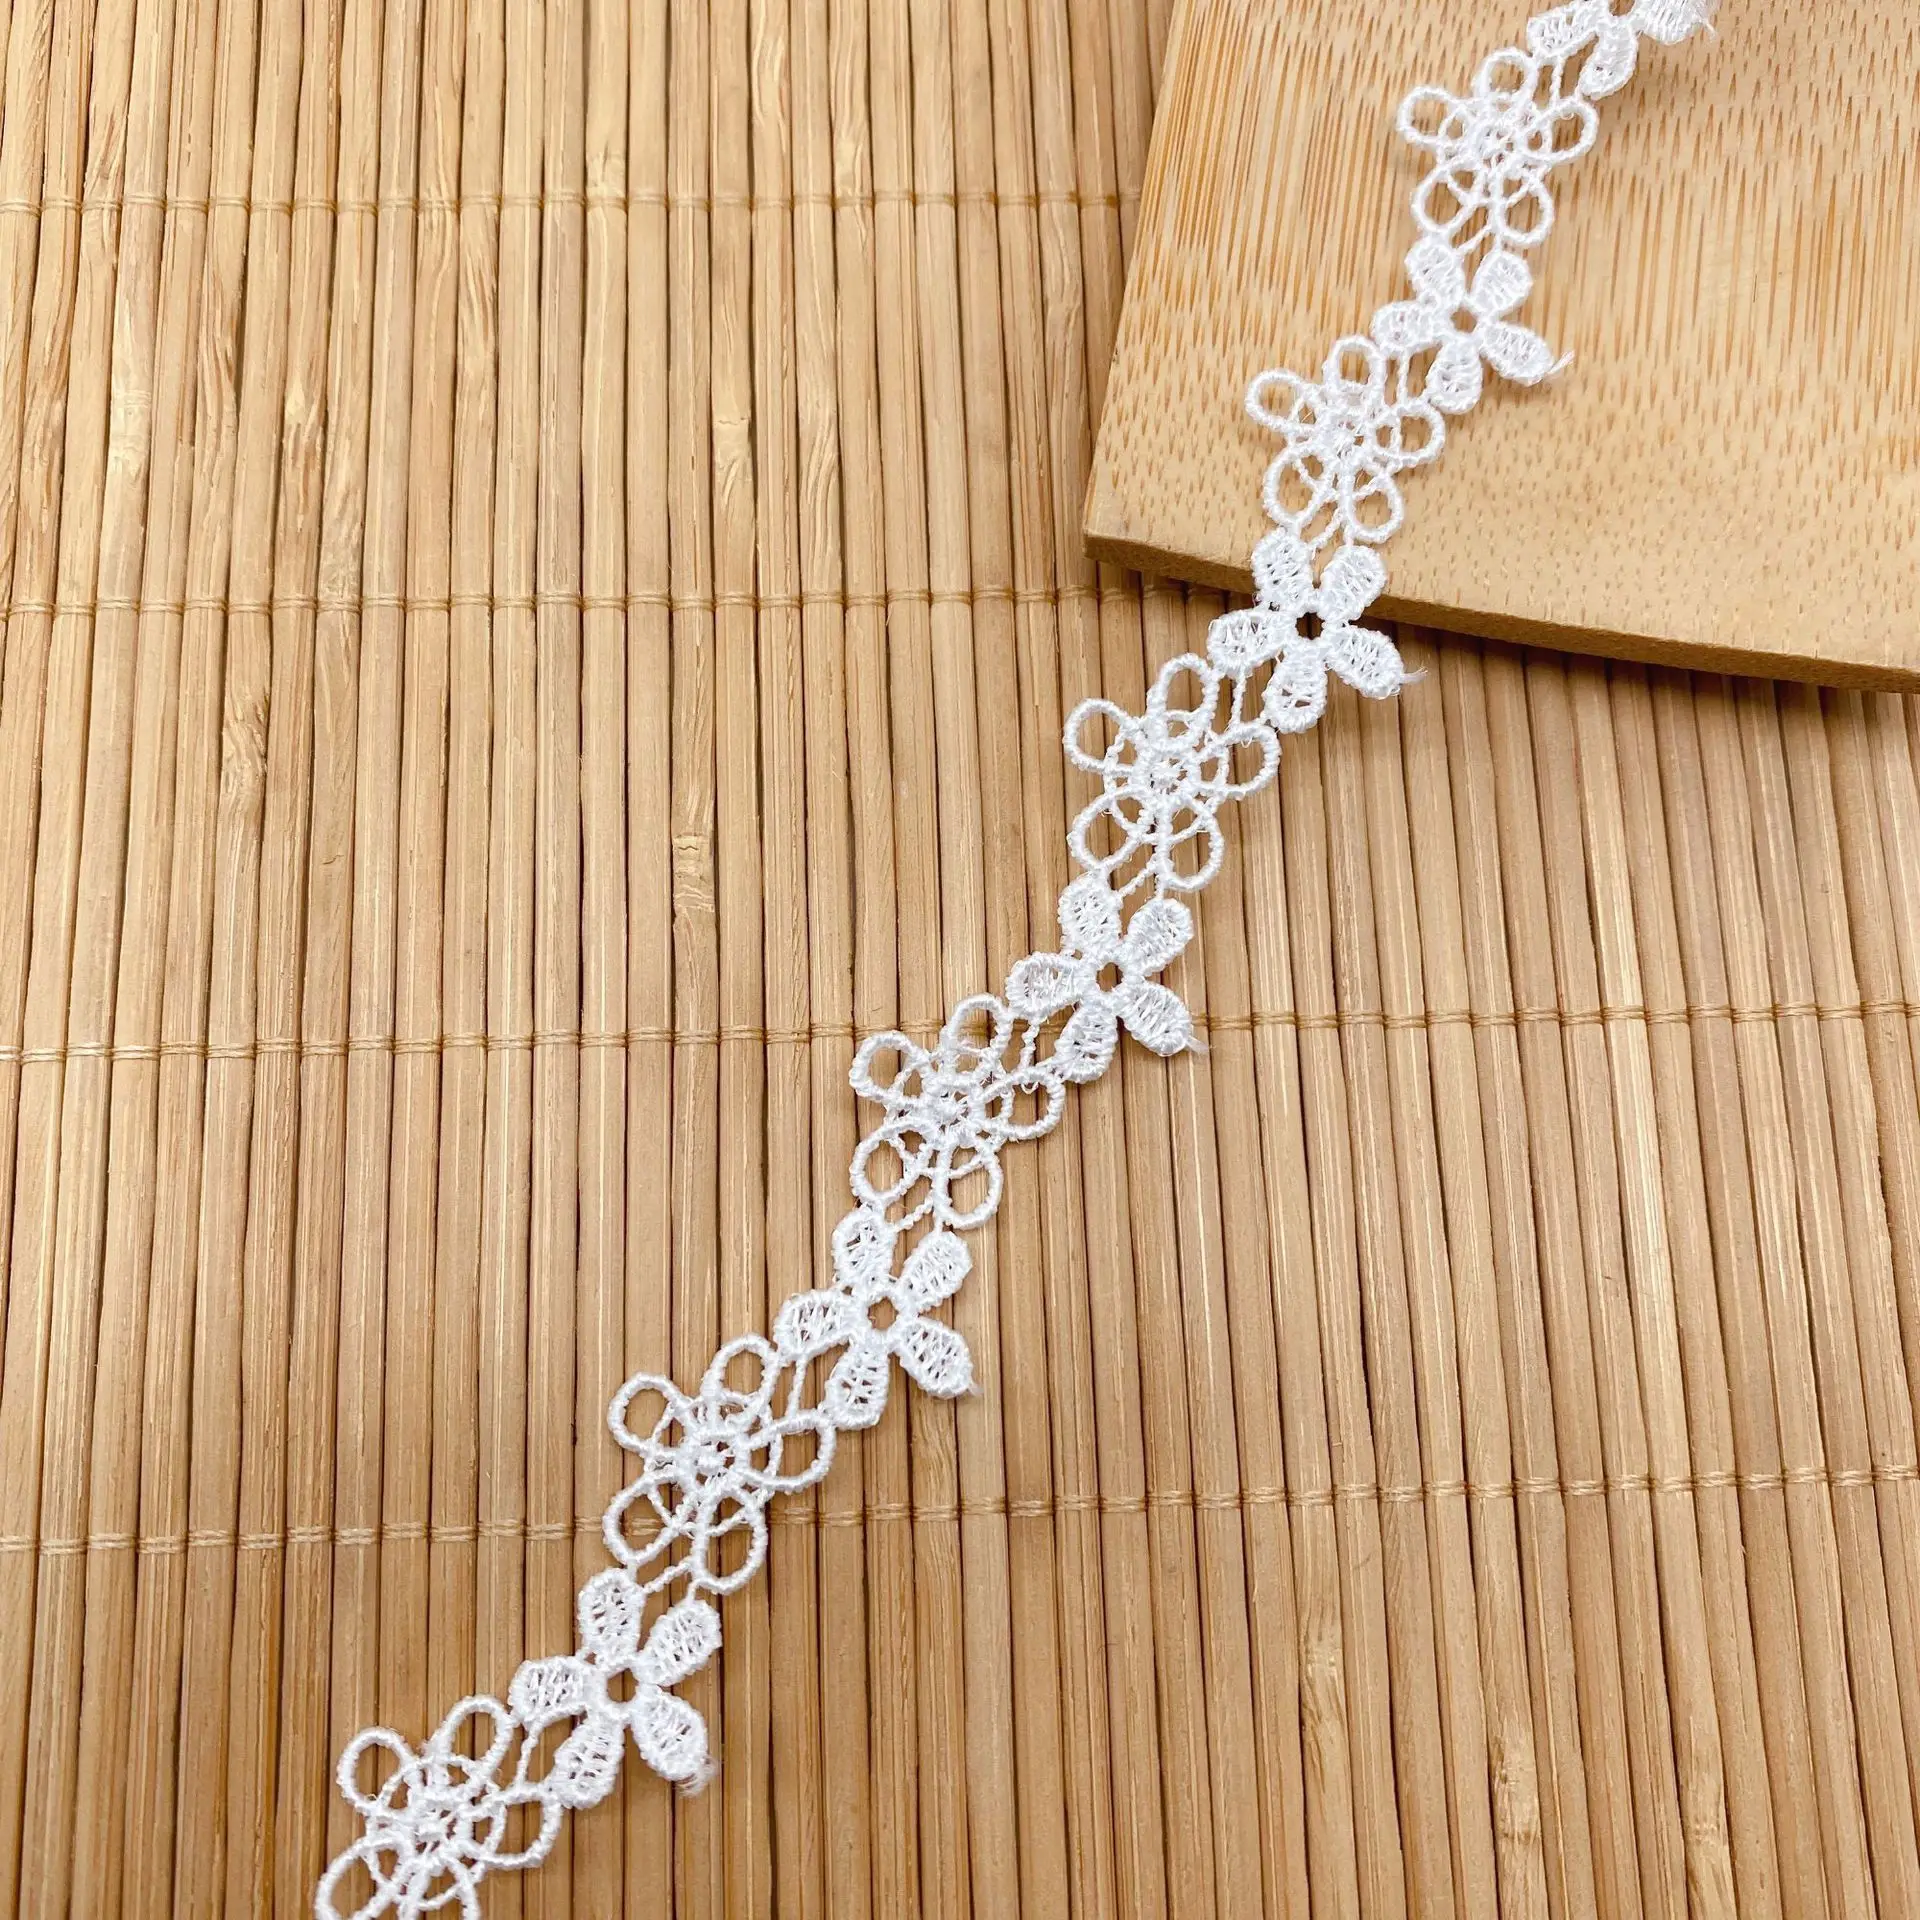 5Yards/הרבה חמוד חלול פרח תחרה, סרט חתוך DIY רקומה לתפירה השמלה קישוט